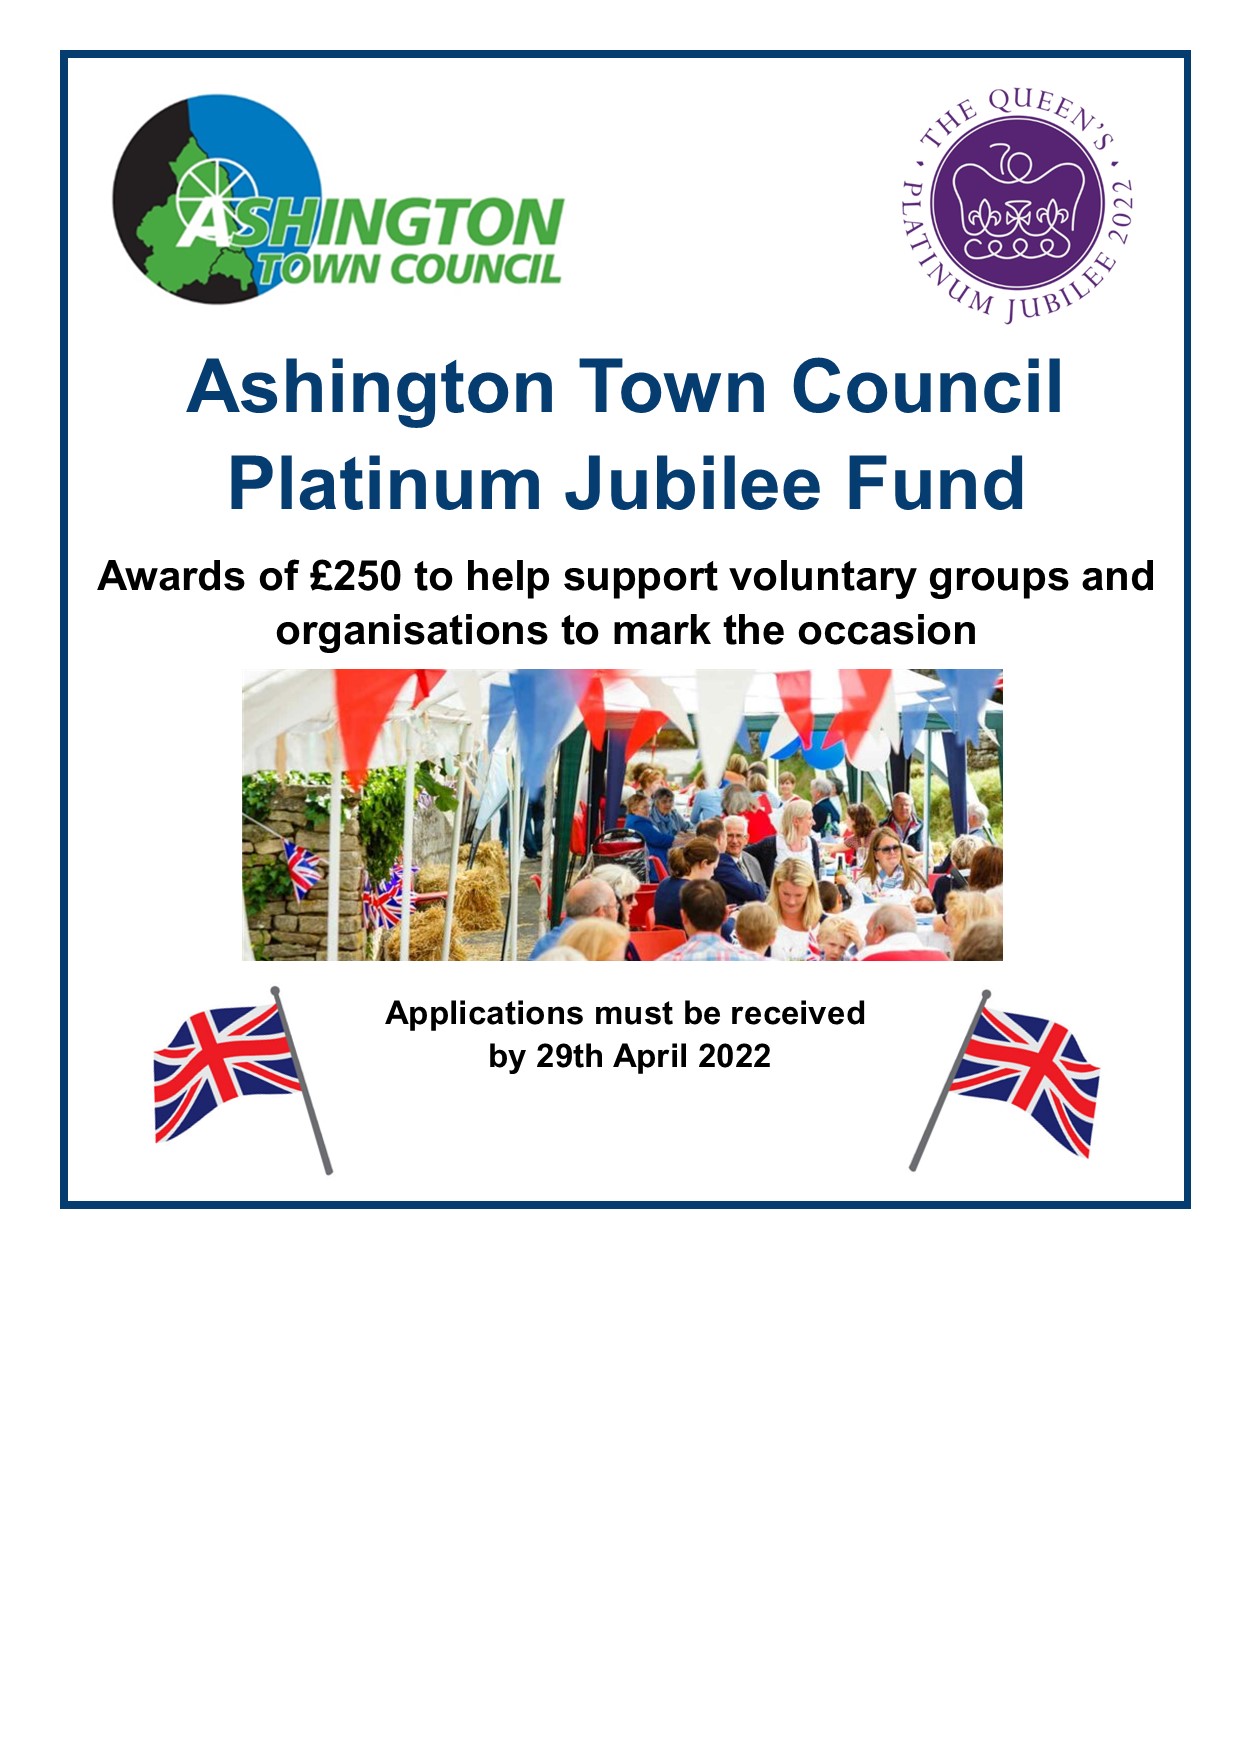 Applications invited for funding towards Platinum Jubilee Celebrations in Ashington